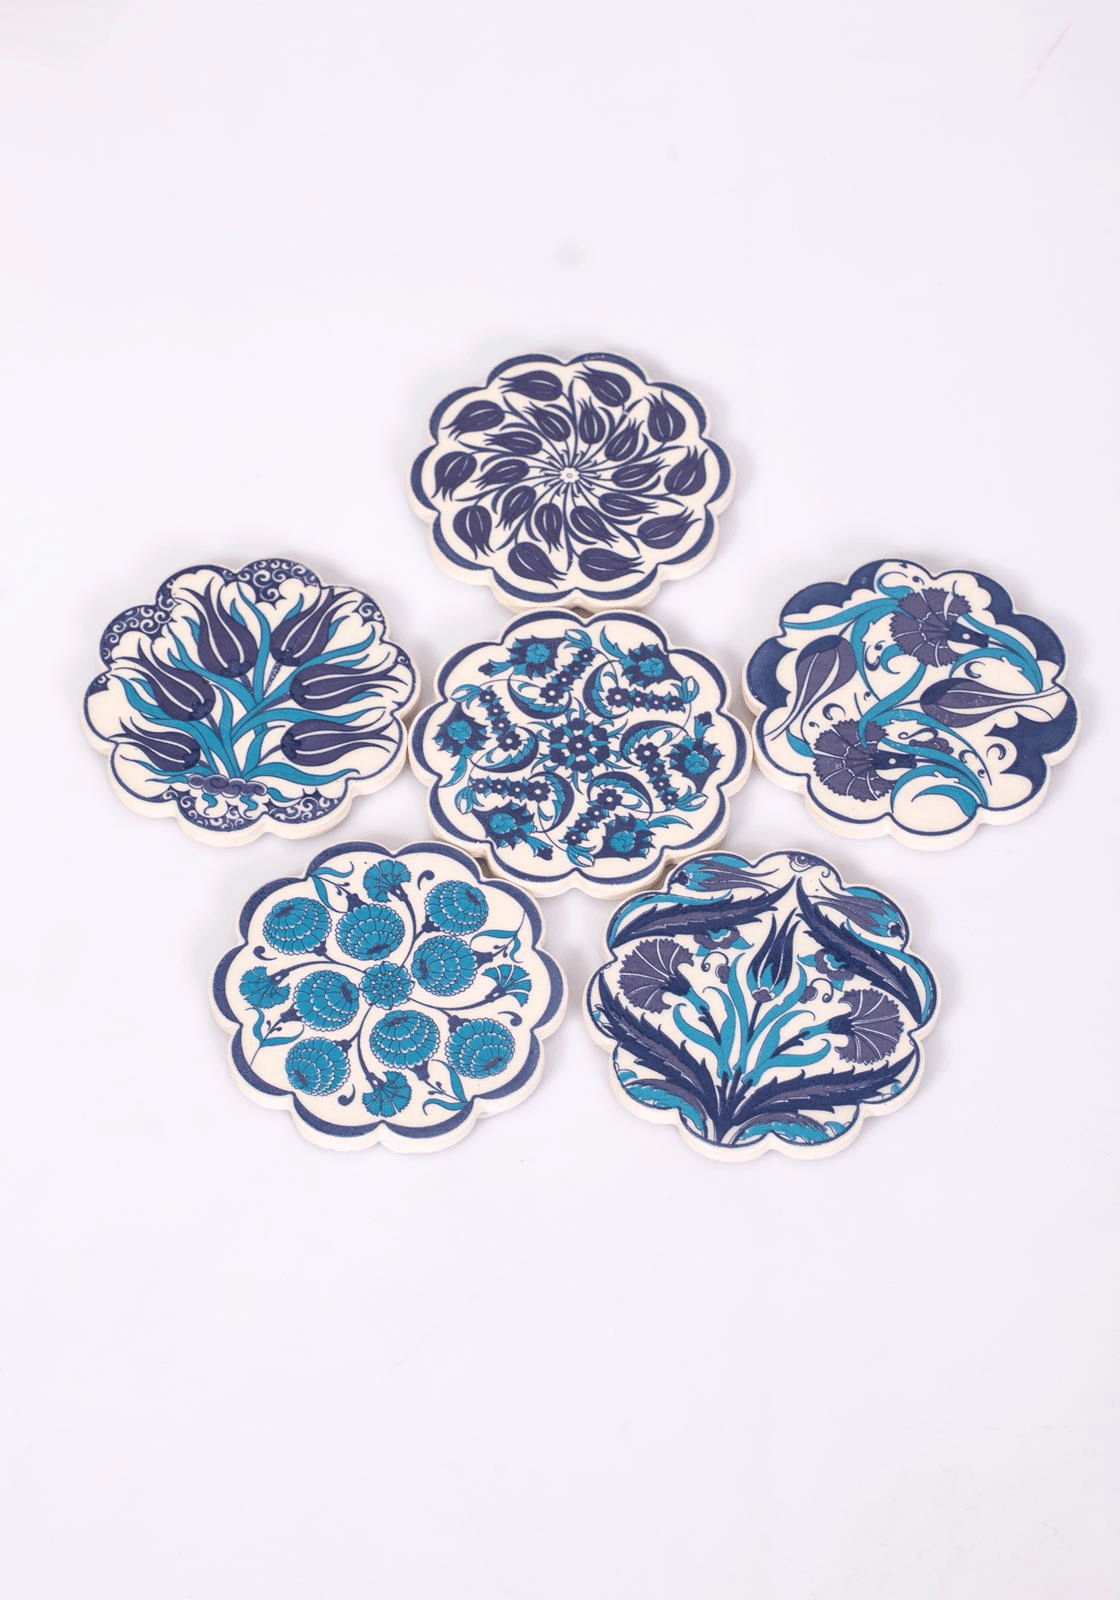 Turkish Floral Mixed Blue Designs Daisy Ceramic Coaster Set - Kitchenware, Home Decor Modern Art Coasters - KAFTHAN